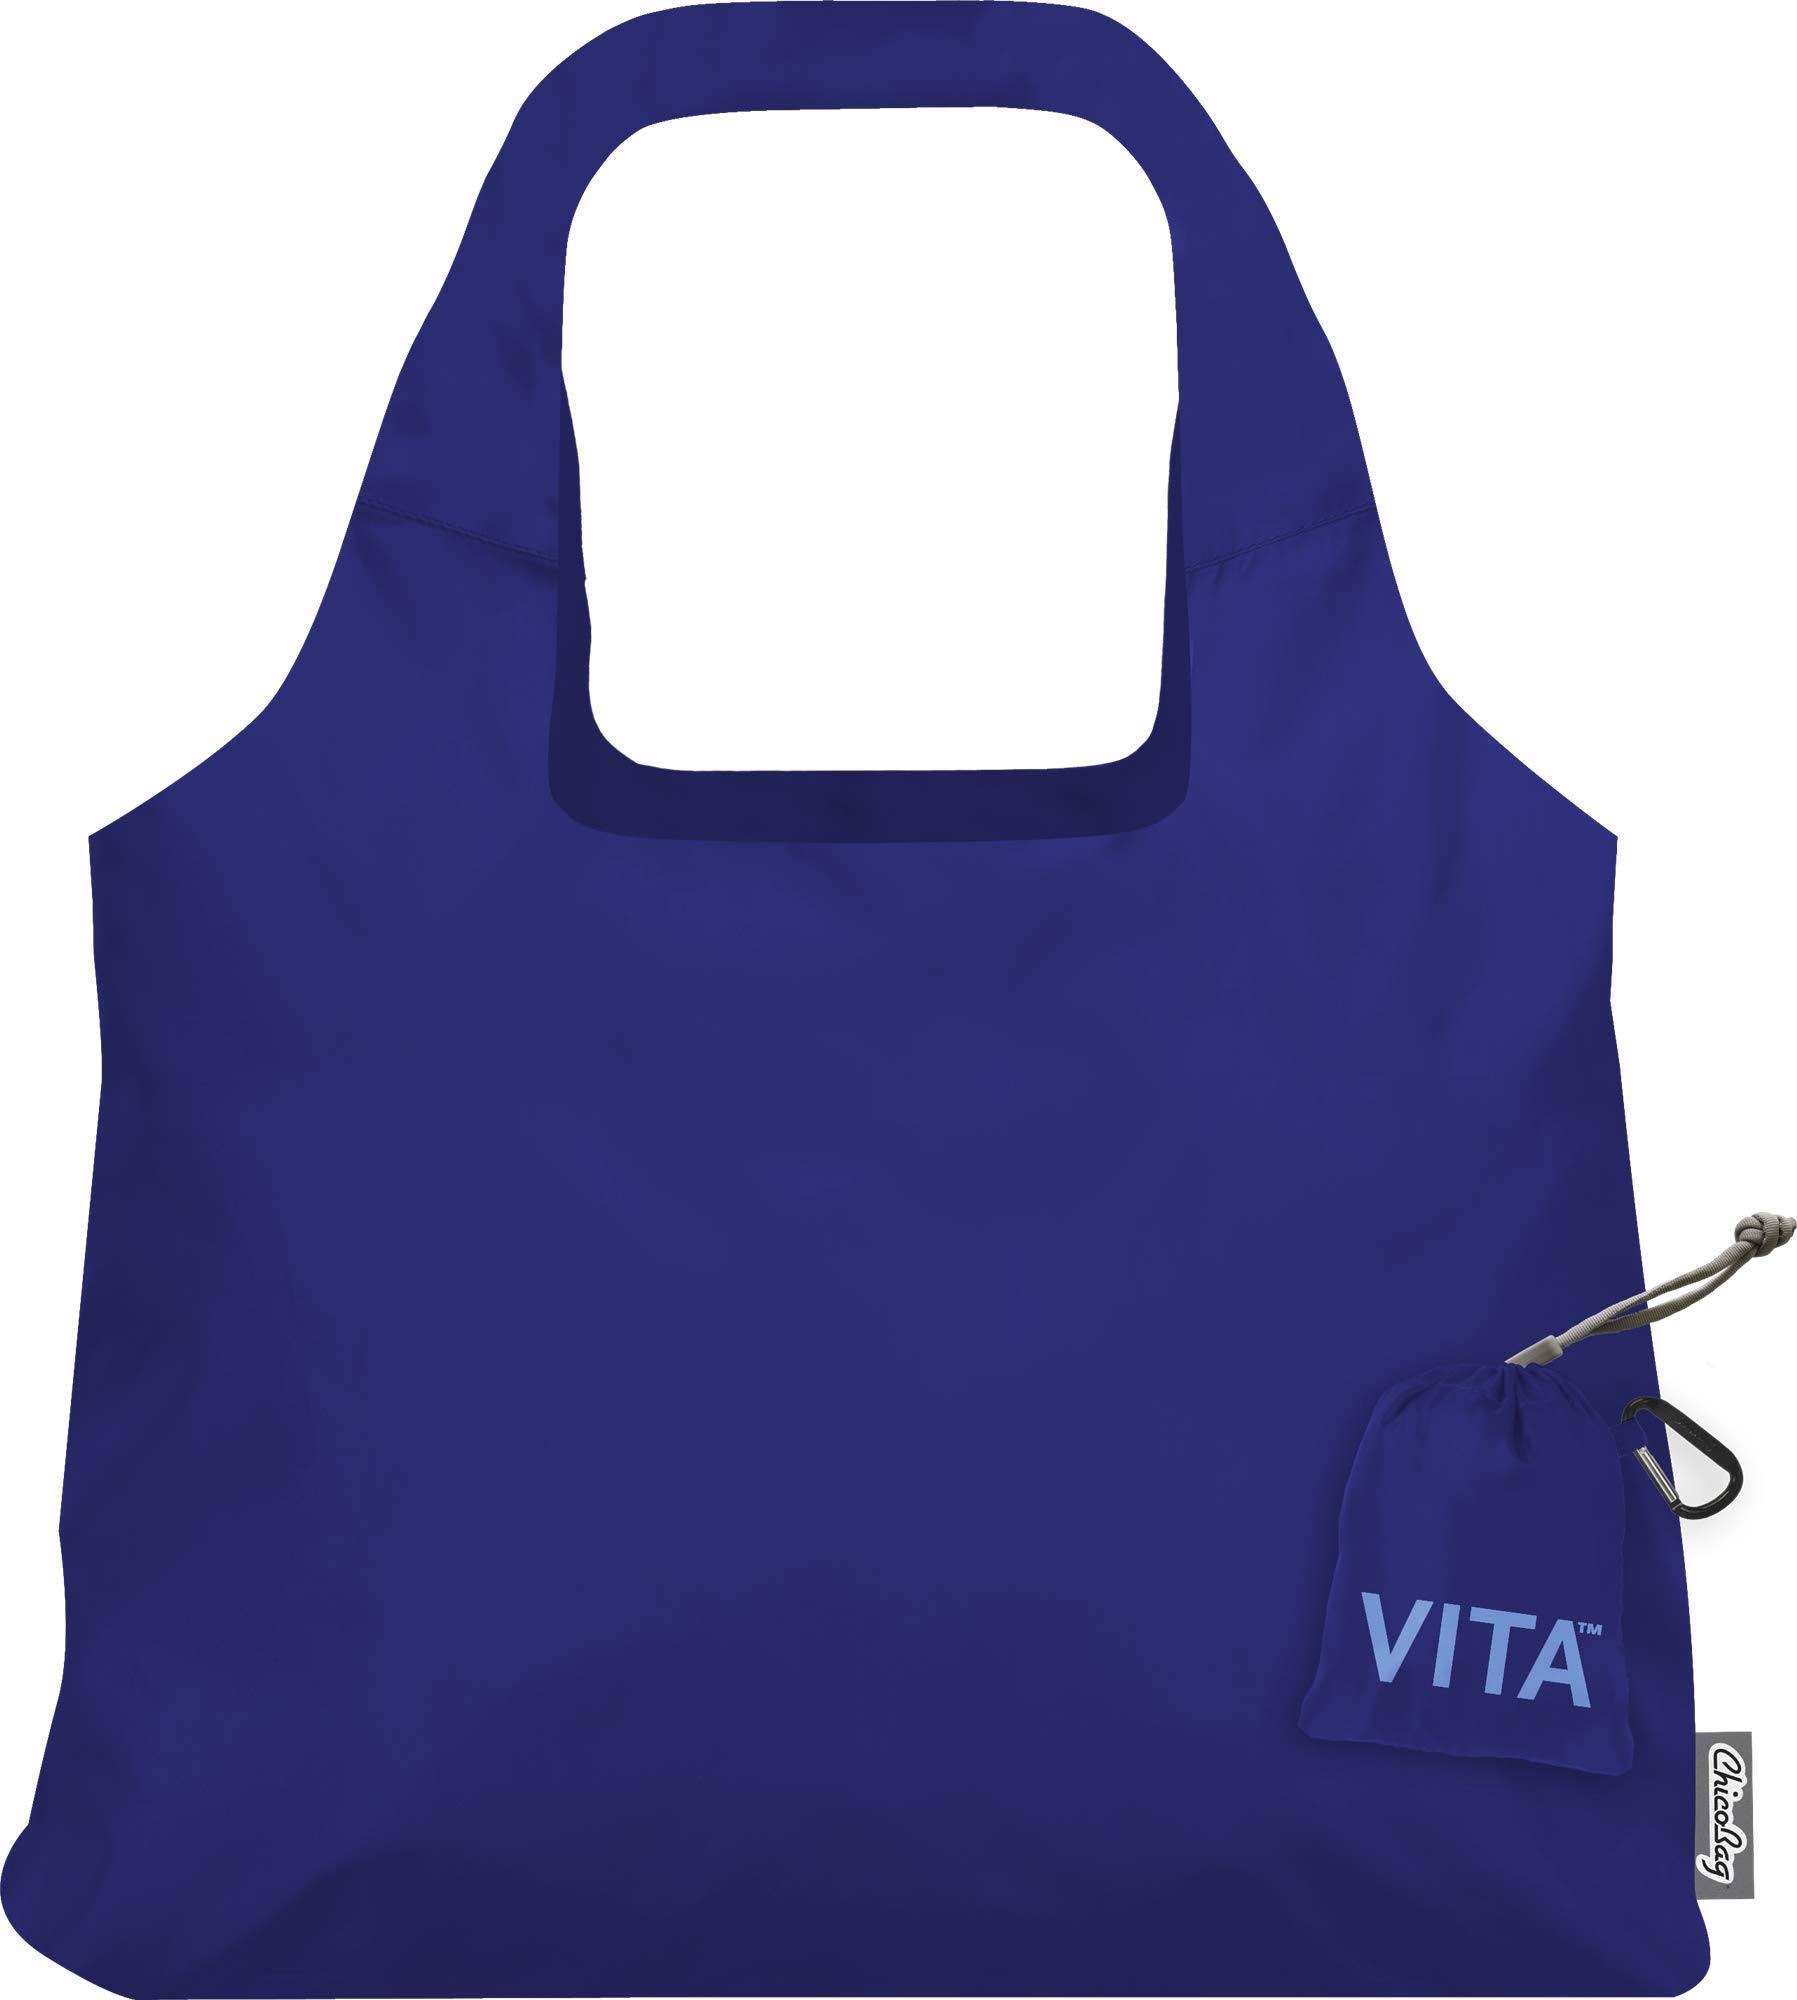 ChicoBag 233241 Mazarine Blue Vita Reusable Shopping Bag 19" x 13"